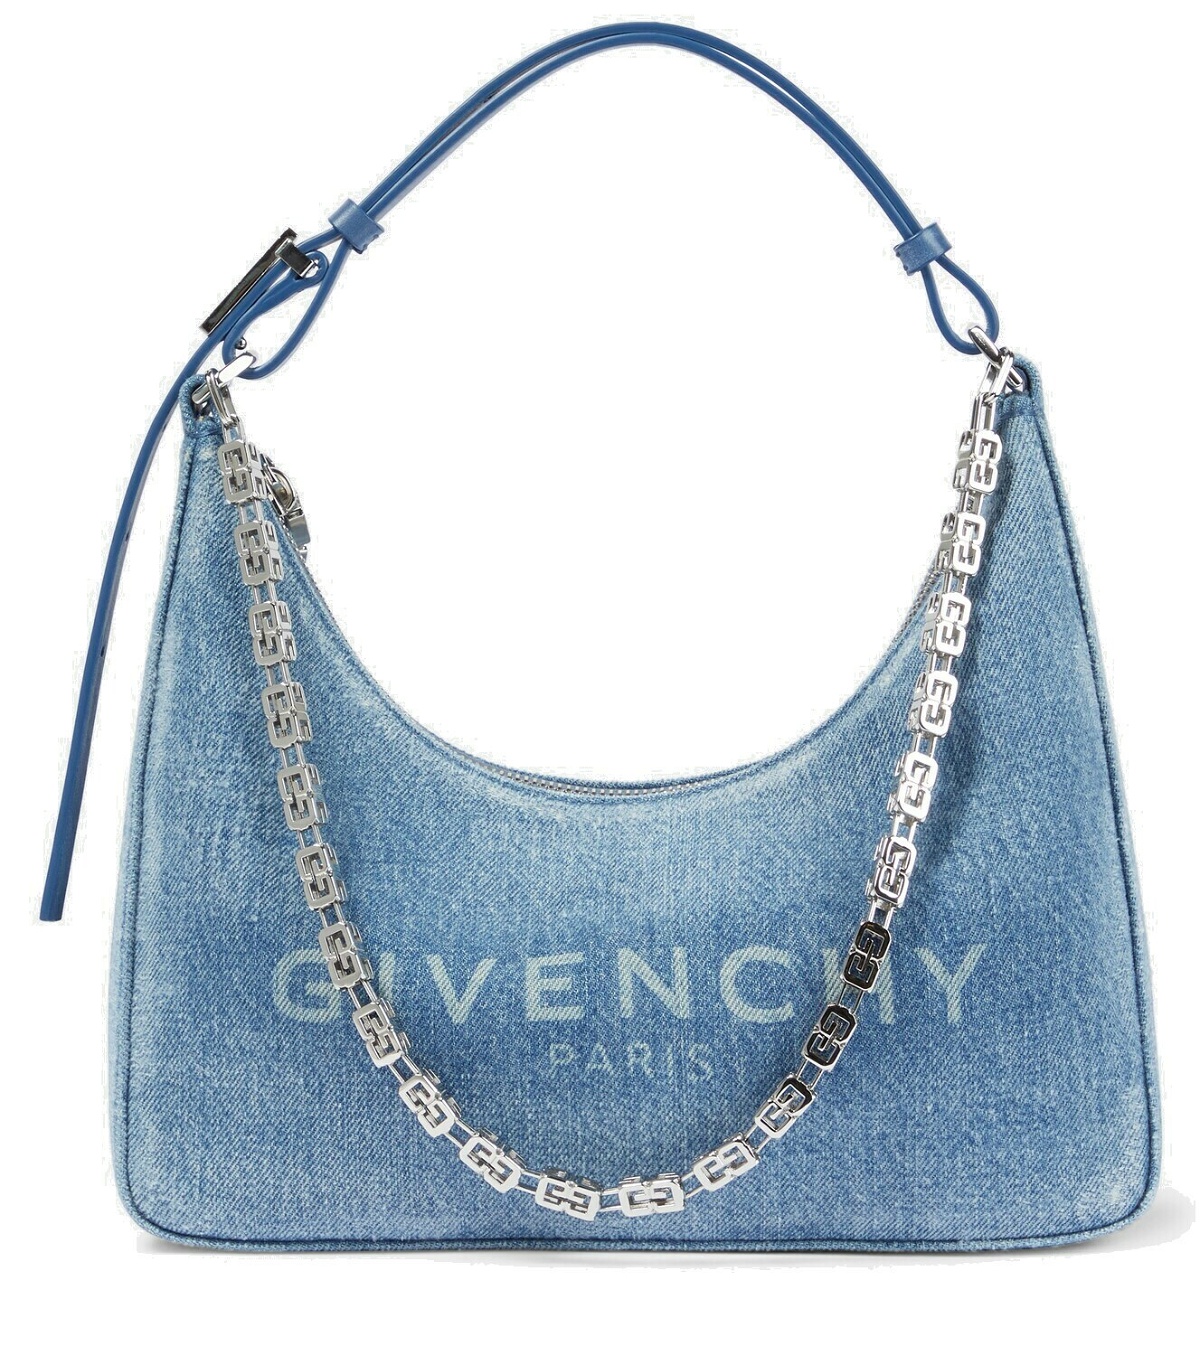 Givenchy - Moon Cut Out Small denim shoulder bag Givenchy